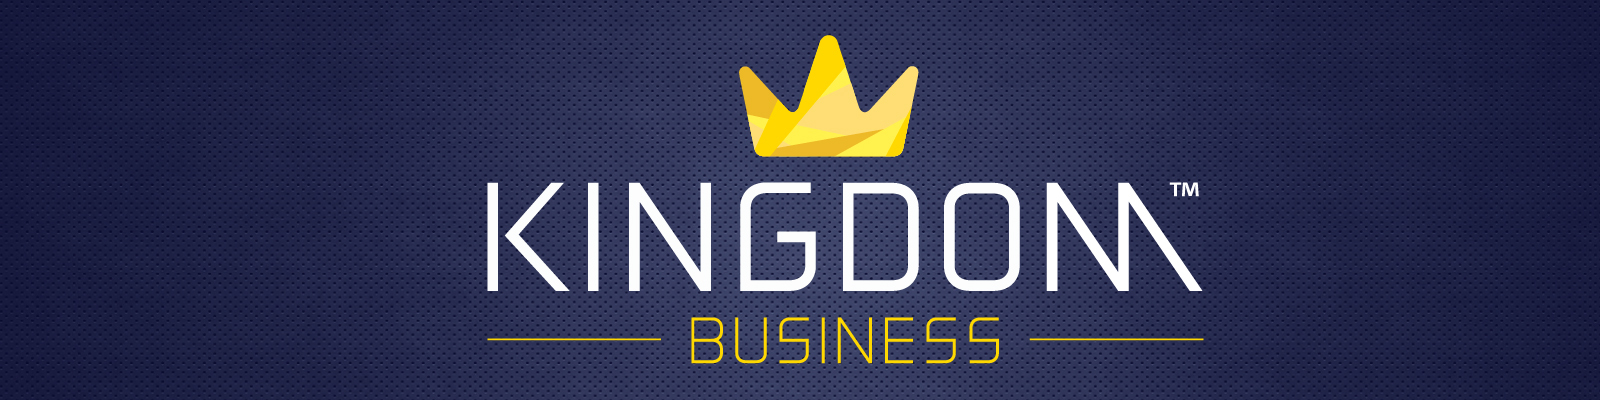 Kingdom Business Podcast